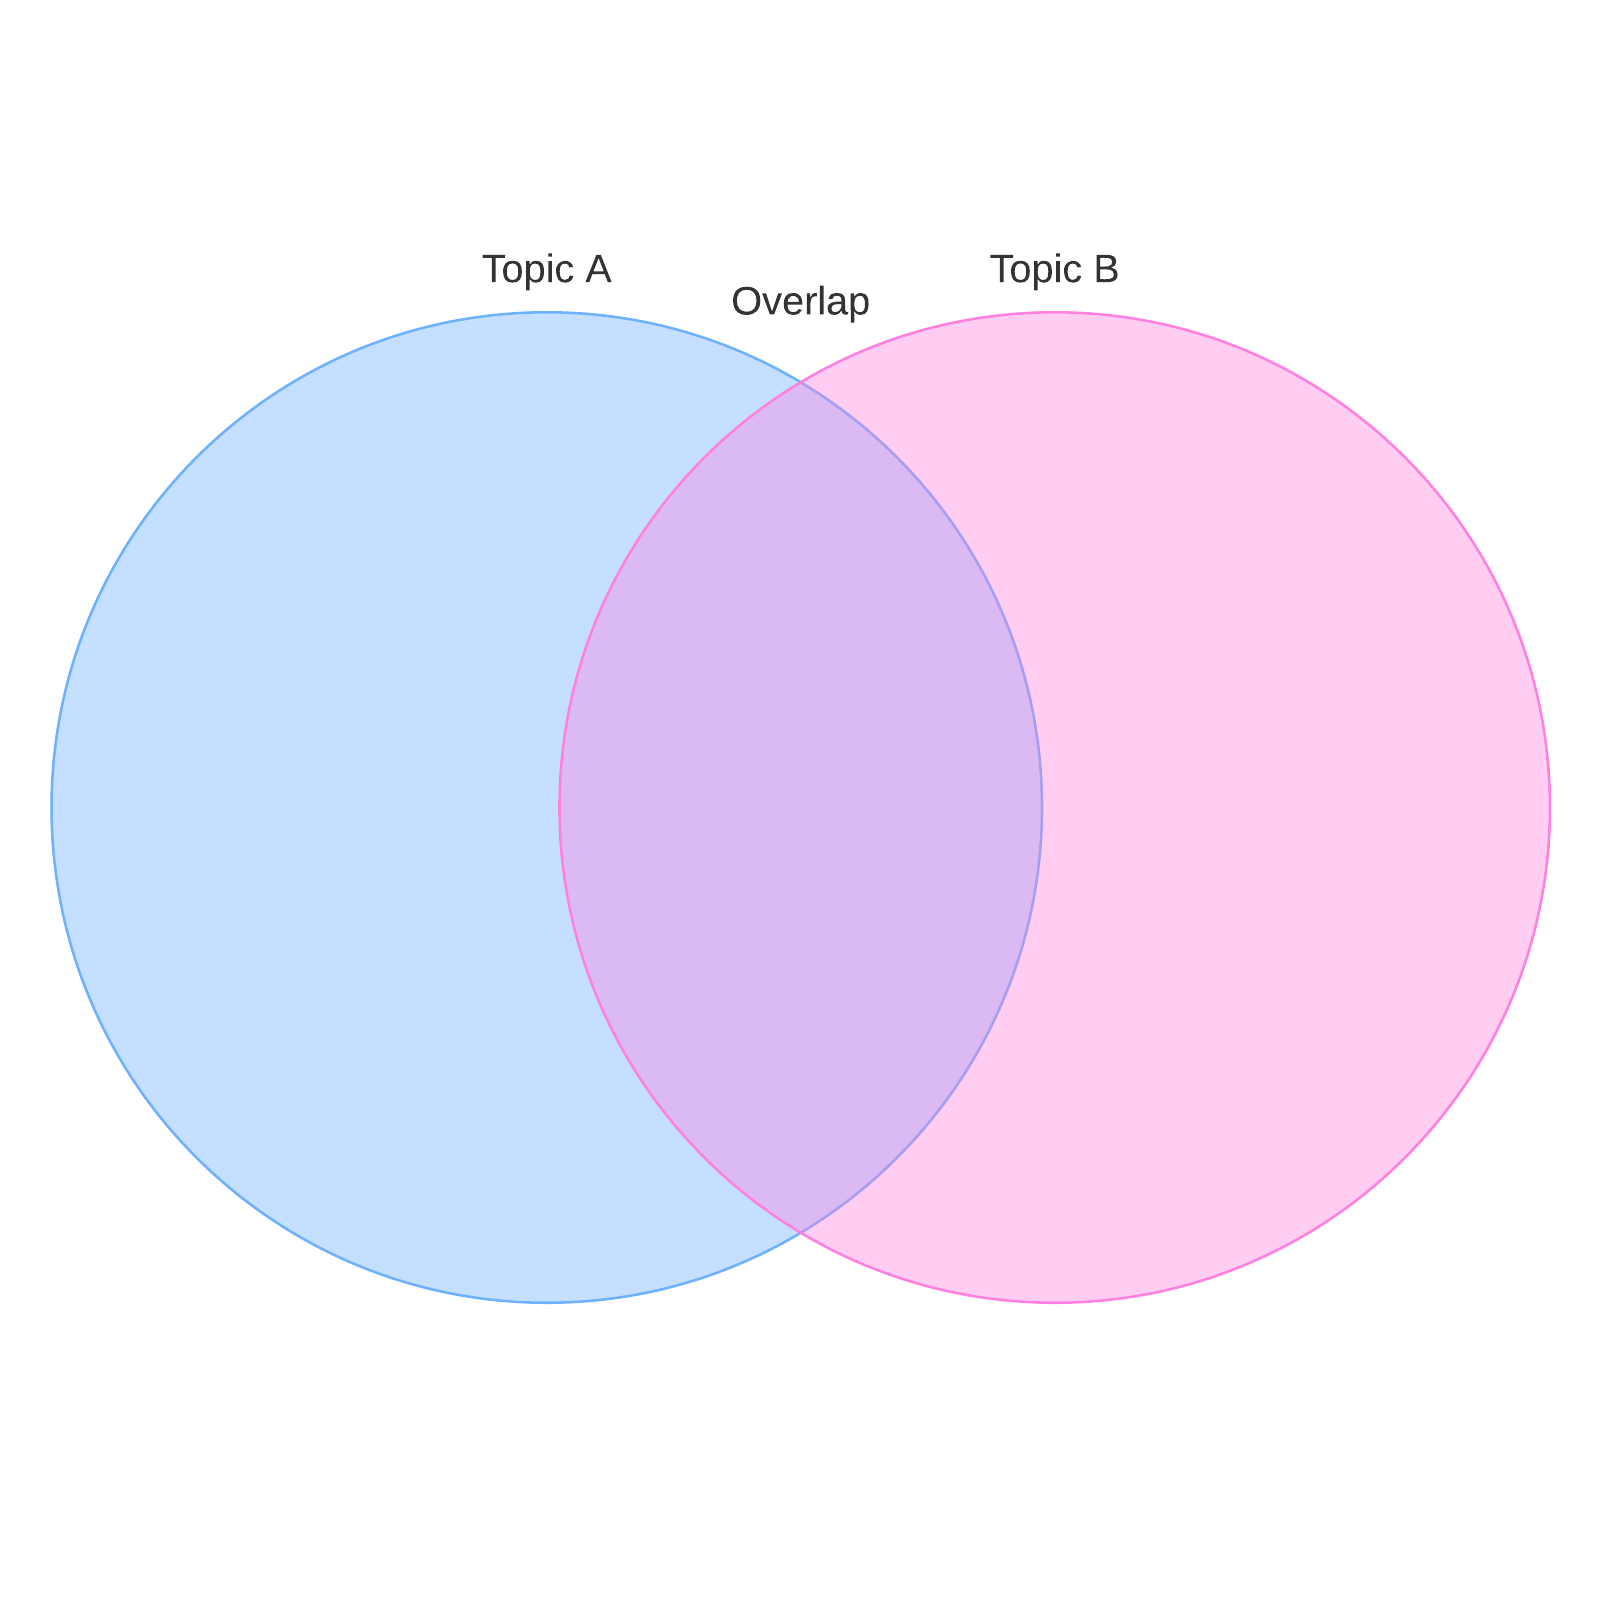 Two-set Venn diagram example